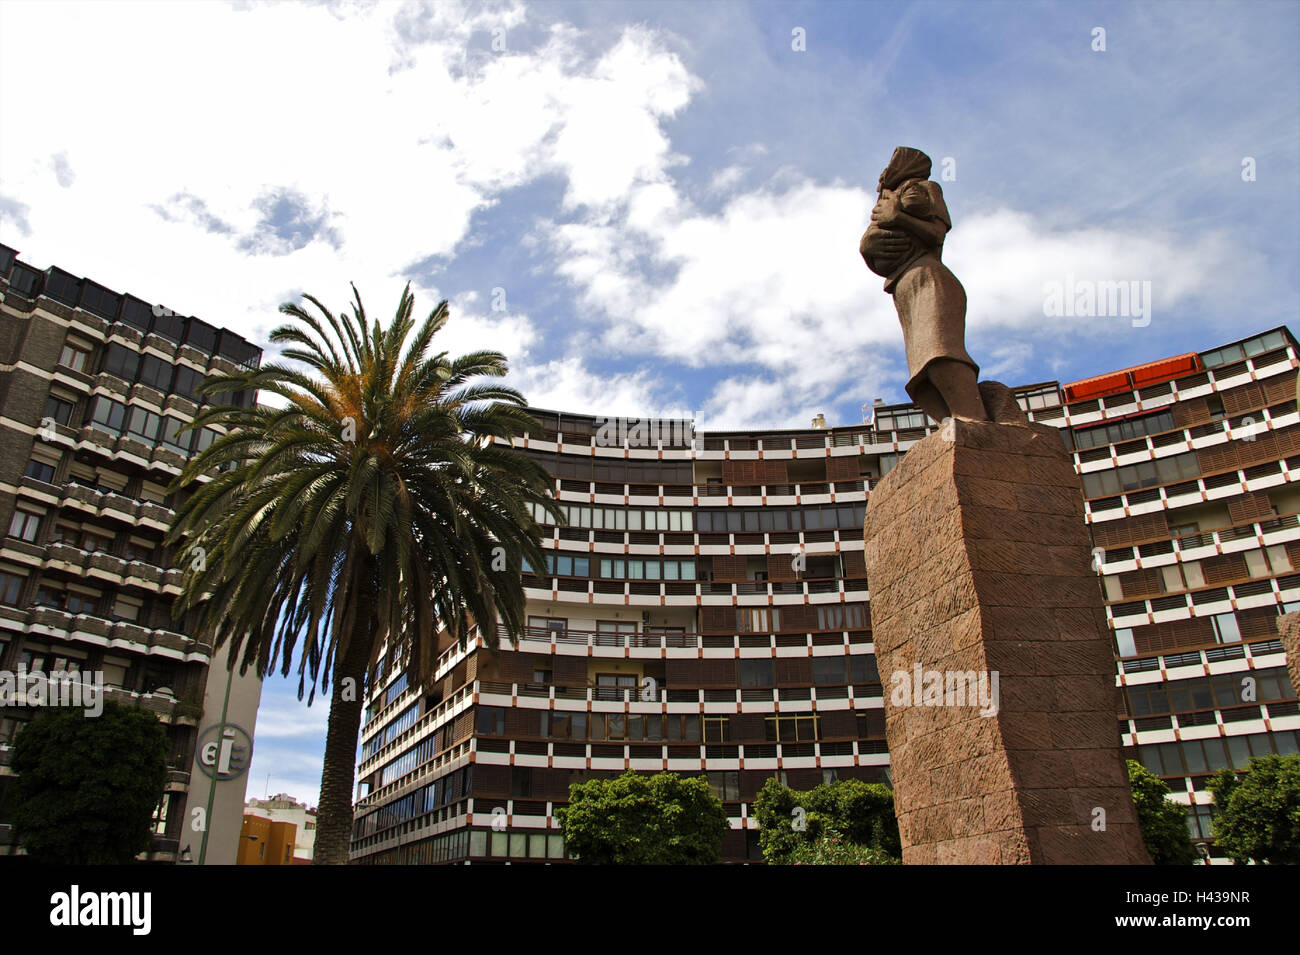 Spain, Canary islands, grain Canaria, Reading Plamas, plaza Espana, monumental sculpture 'Actividades Primitivas Canarias', artist Loiu Montull, Stock Photo